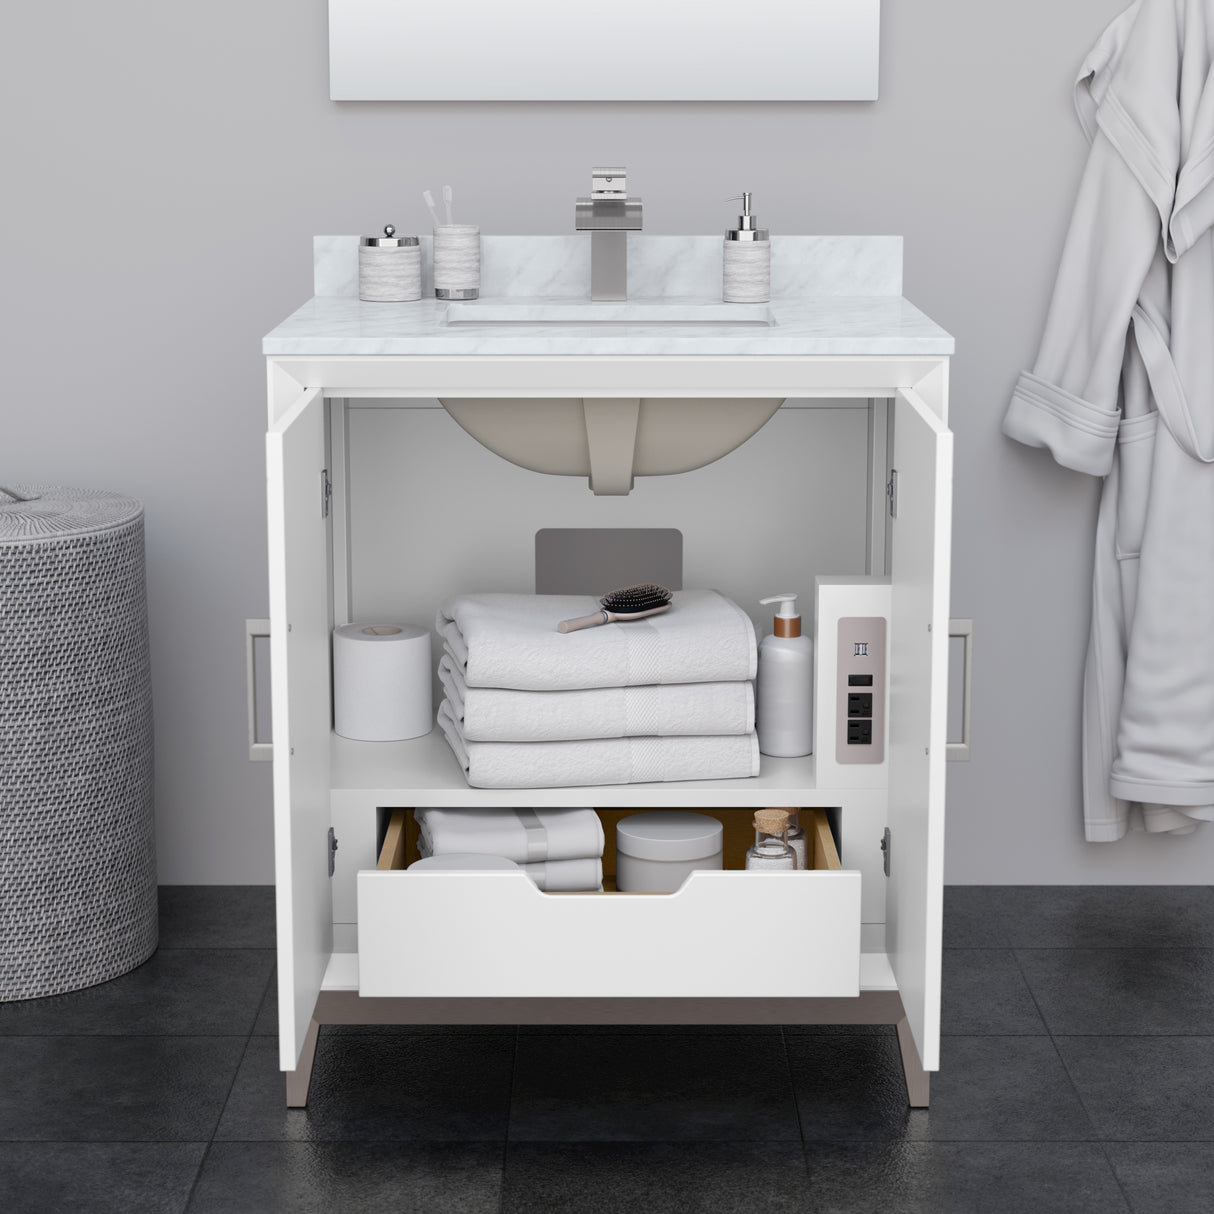 Marlena 30 Inch Single Bathroom Vanity in White No Countertop No Sink Matte Black Trim